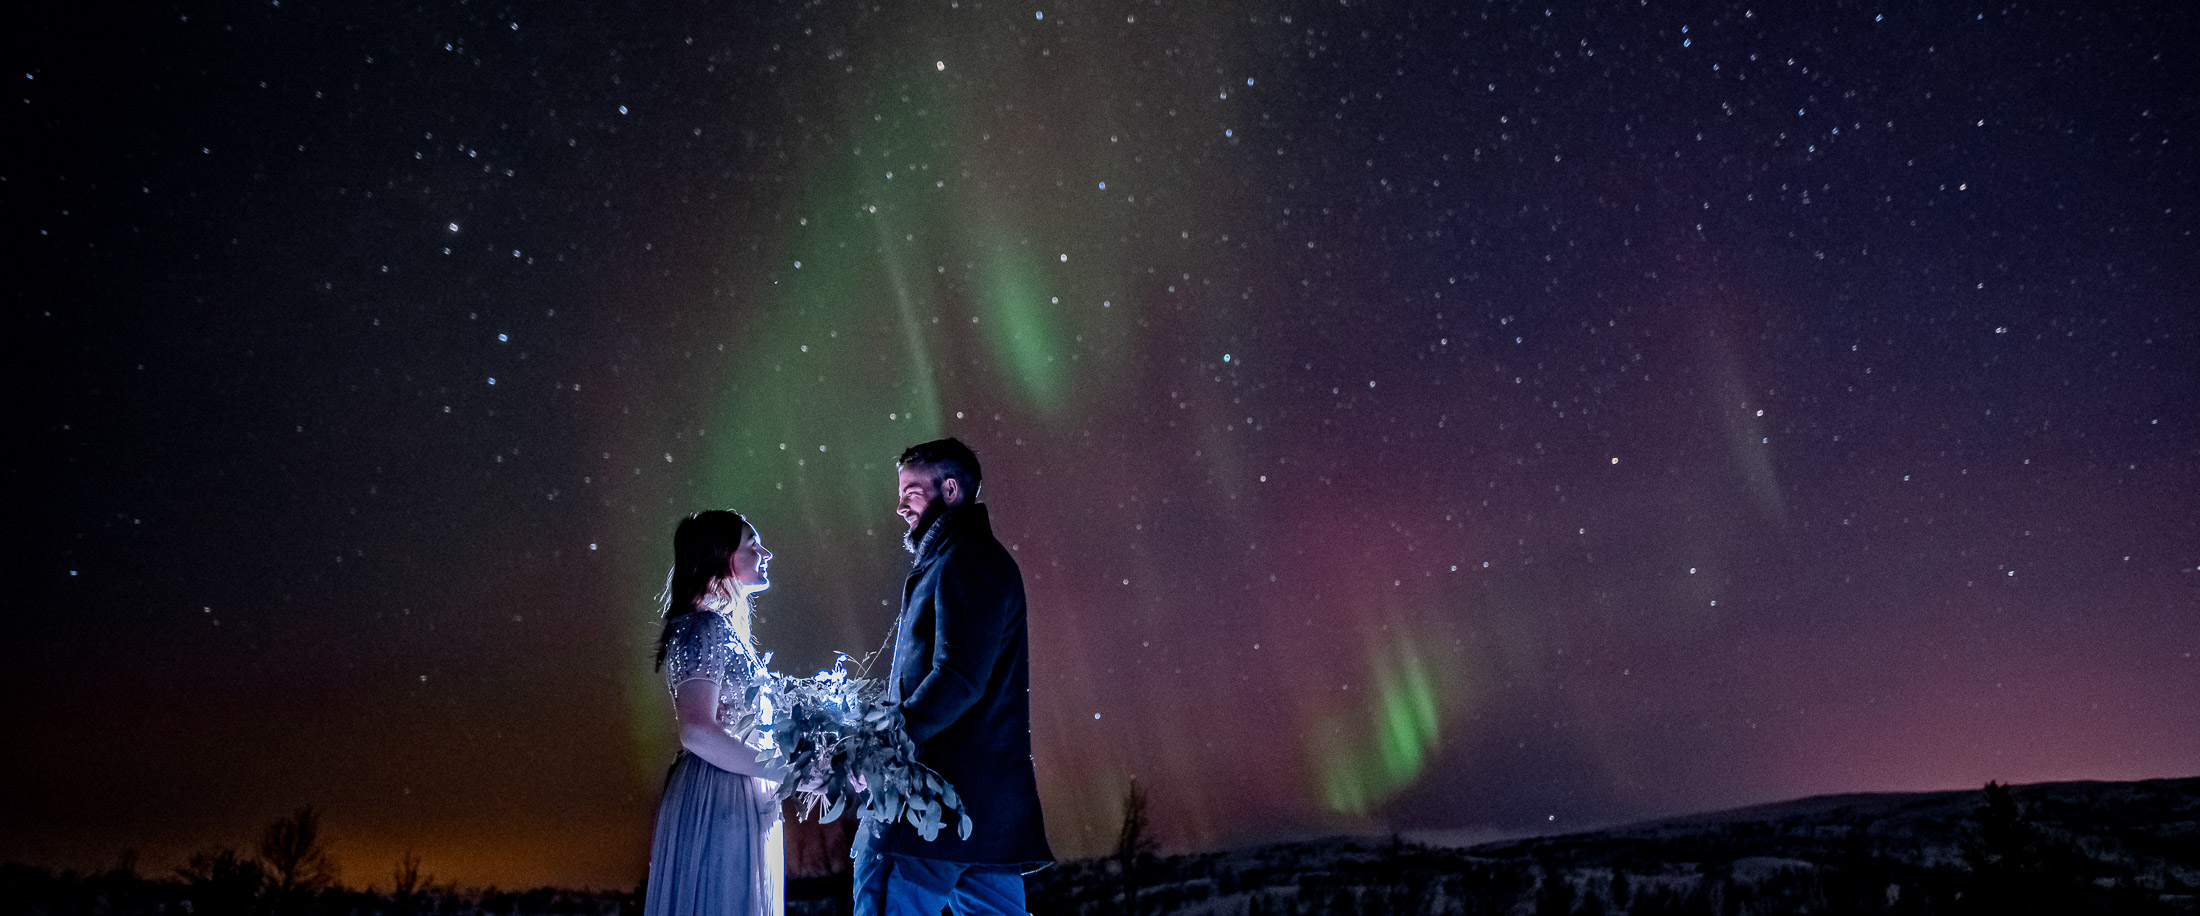 Adventure elopement under Northern Lights in Northern Norway - elopement photographer TS Foto Design